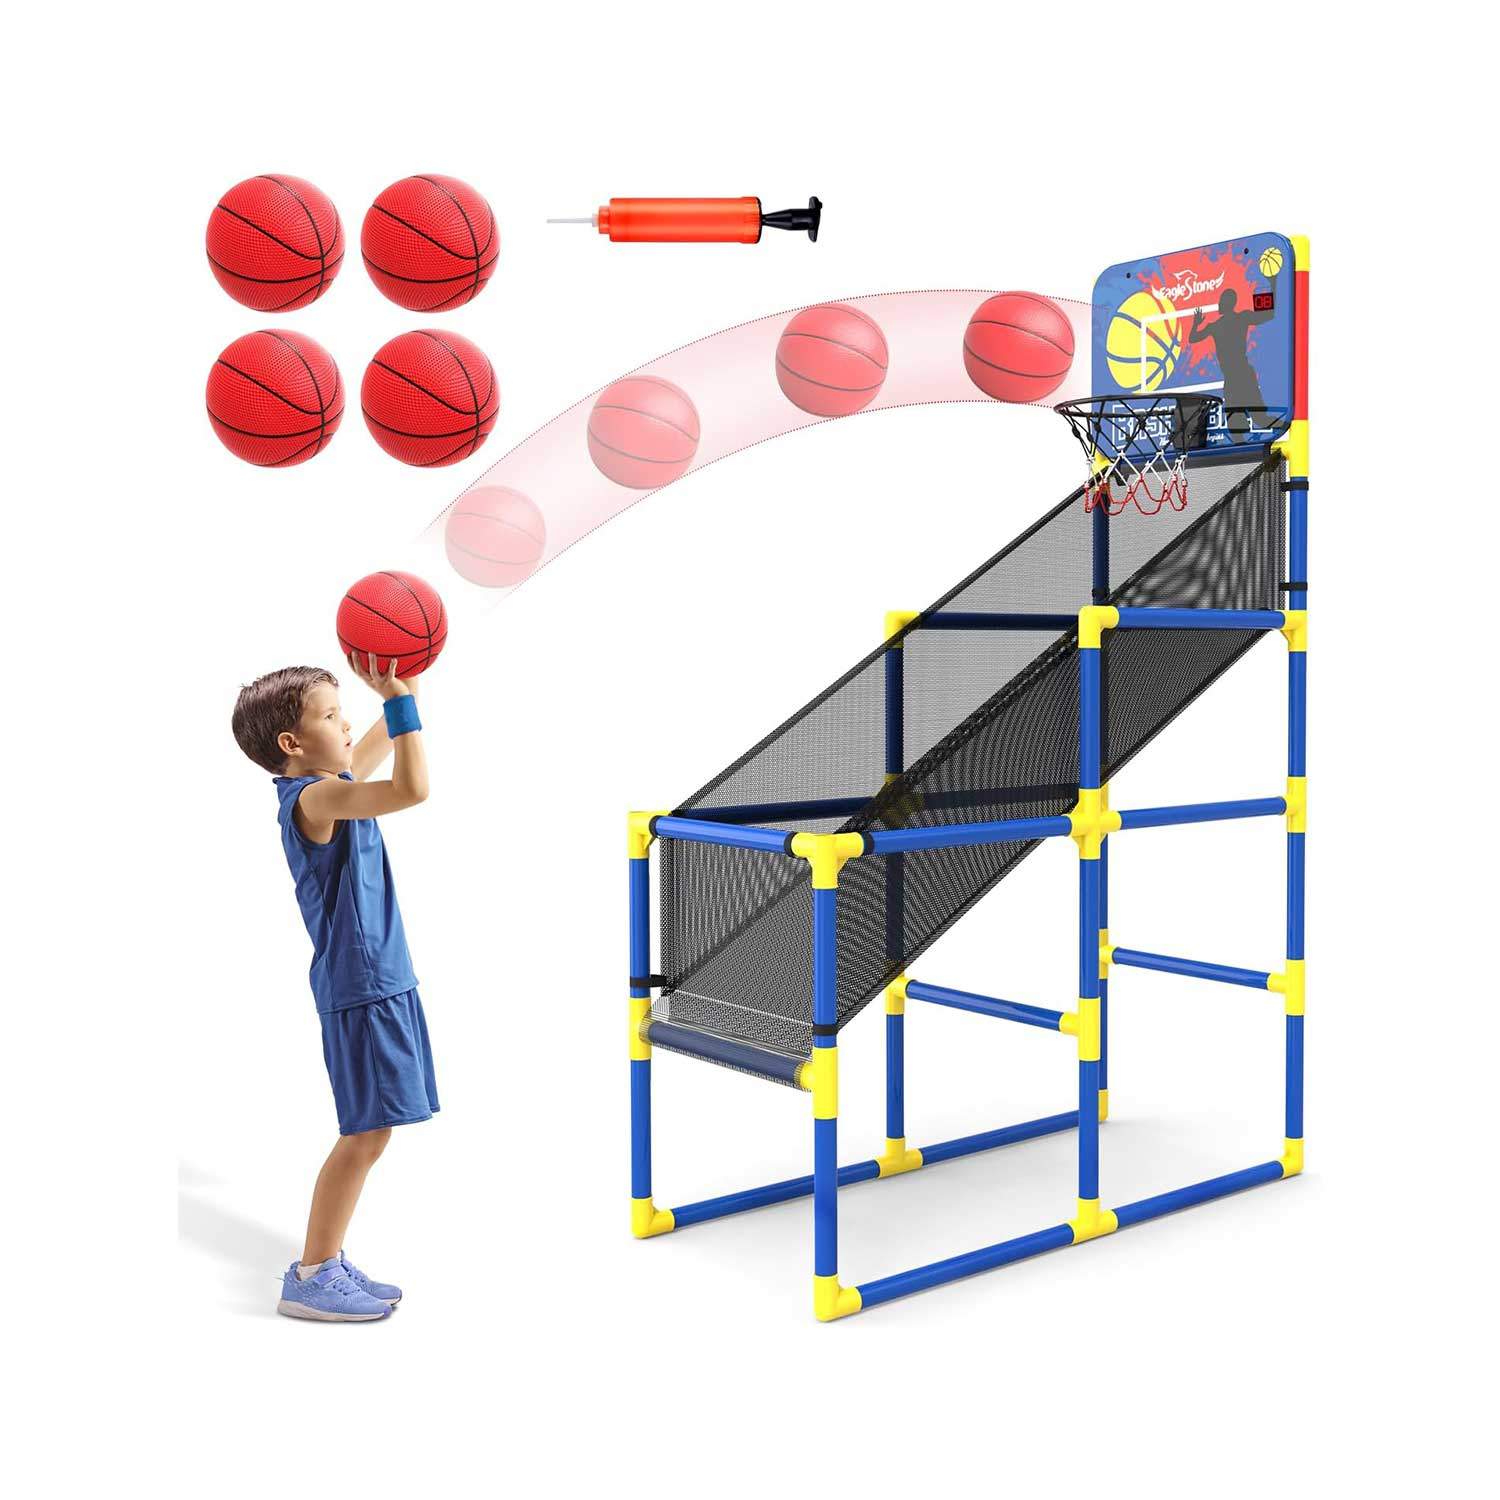 Kids Basketball Arcade Game